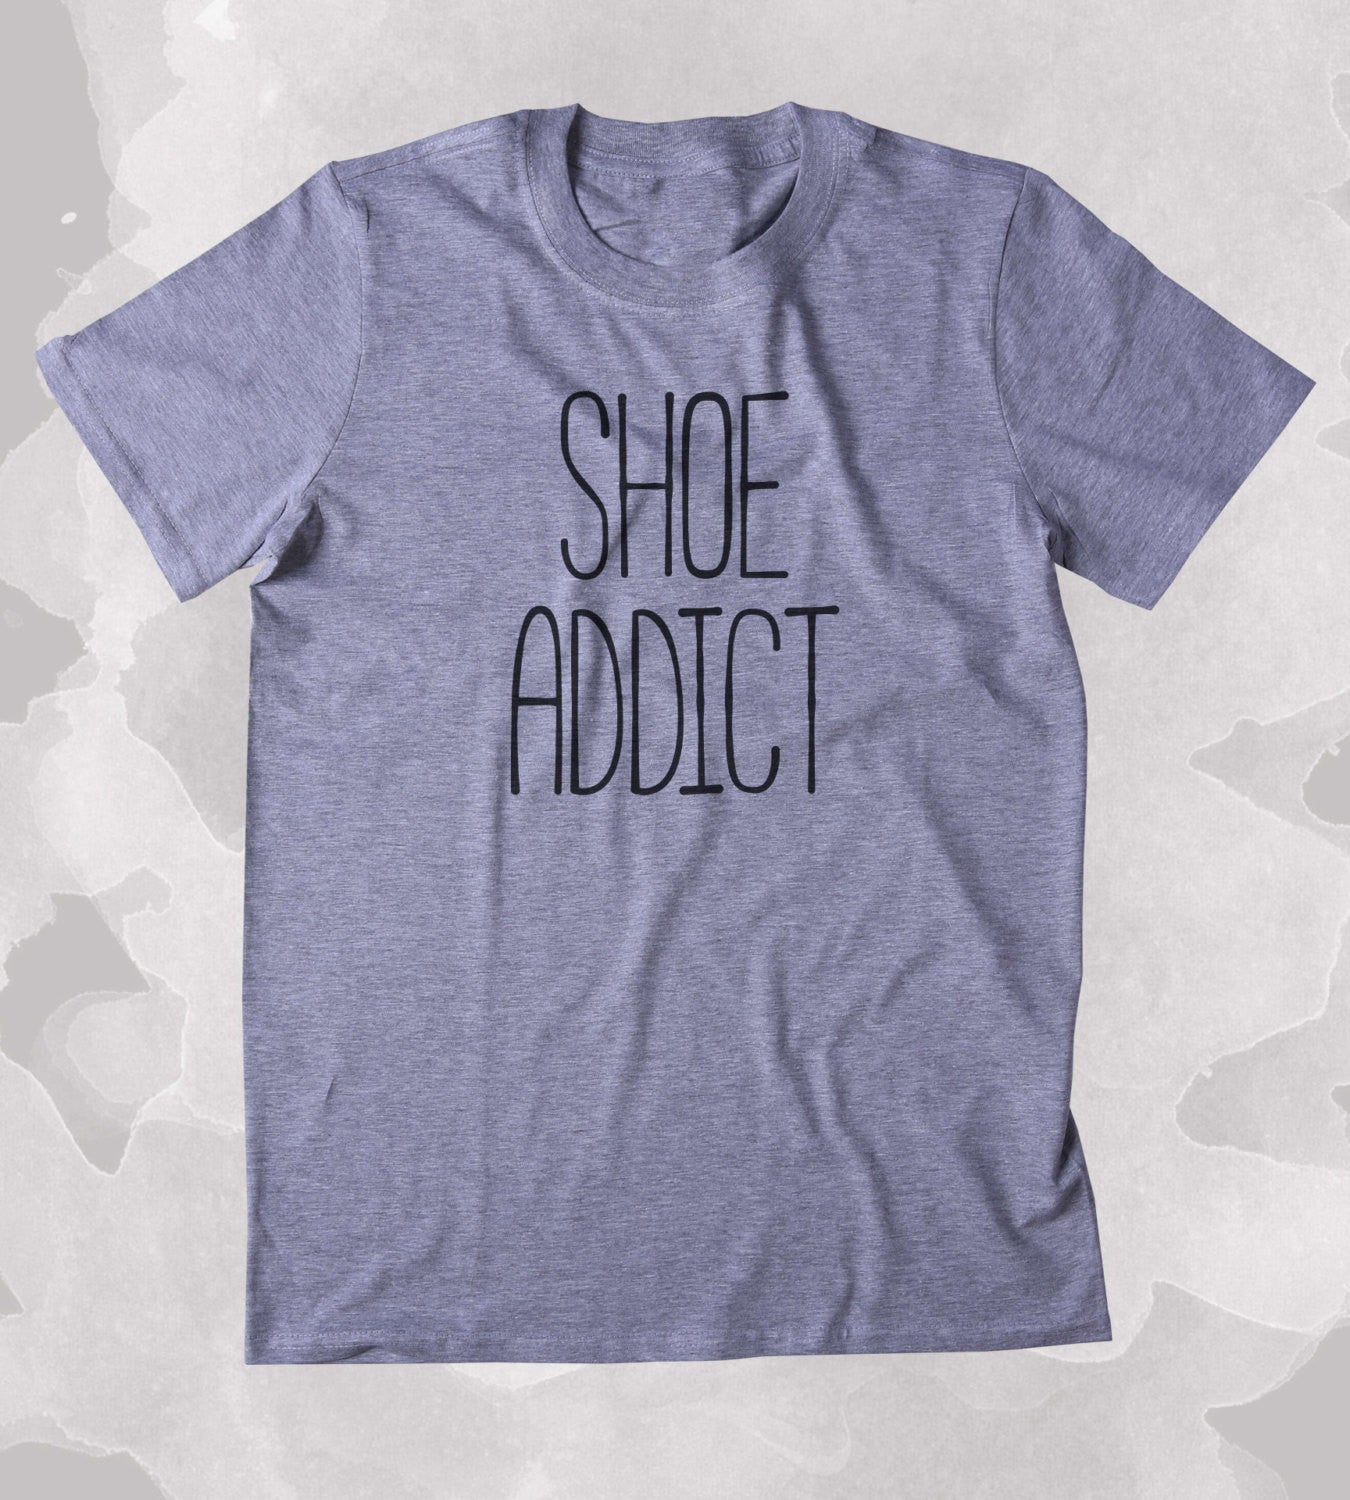 Shoe Addict Shirt Fashion High Heel Sneakers Girly Clothing Tumblr photo image